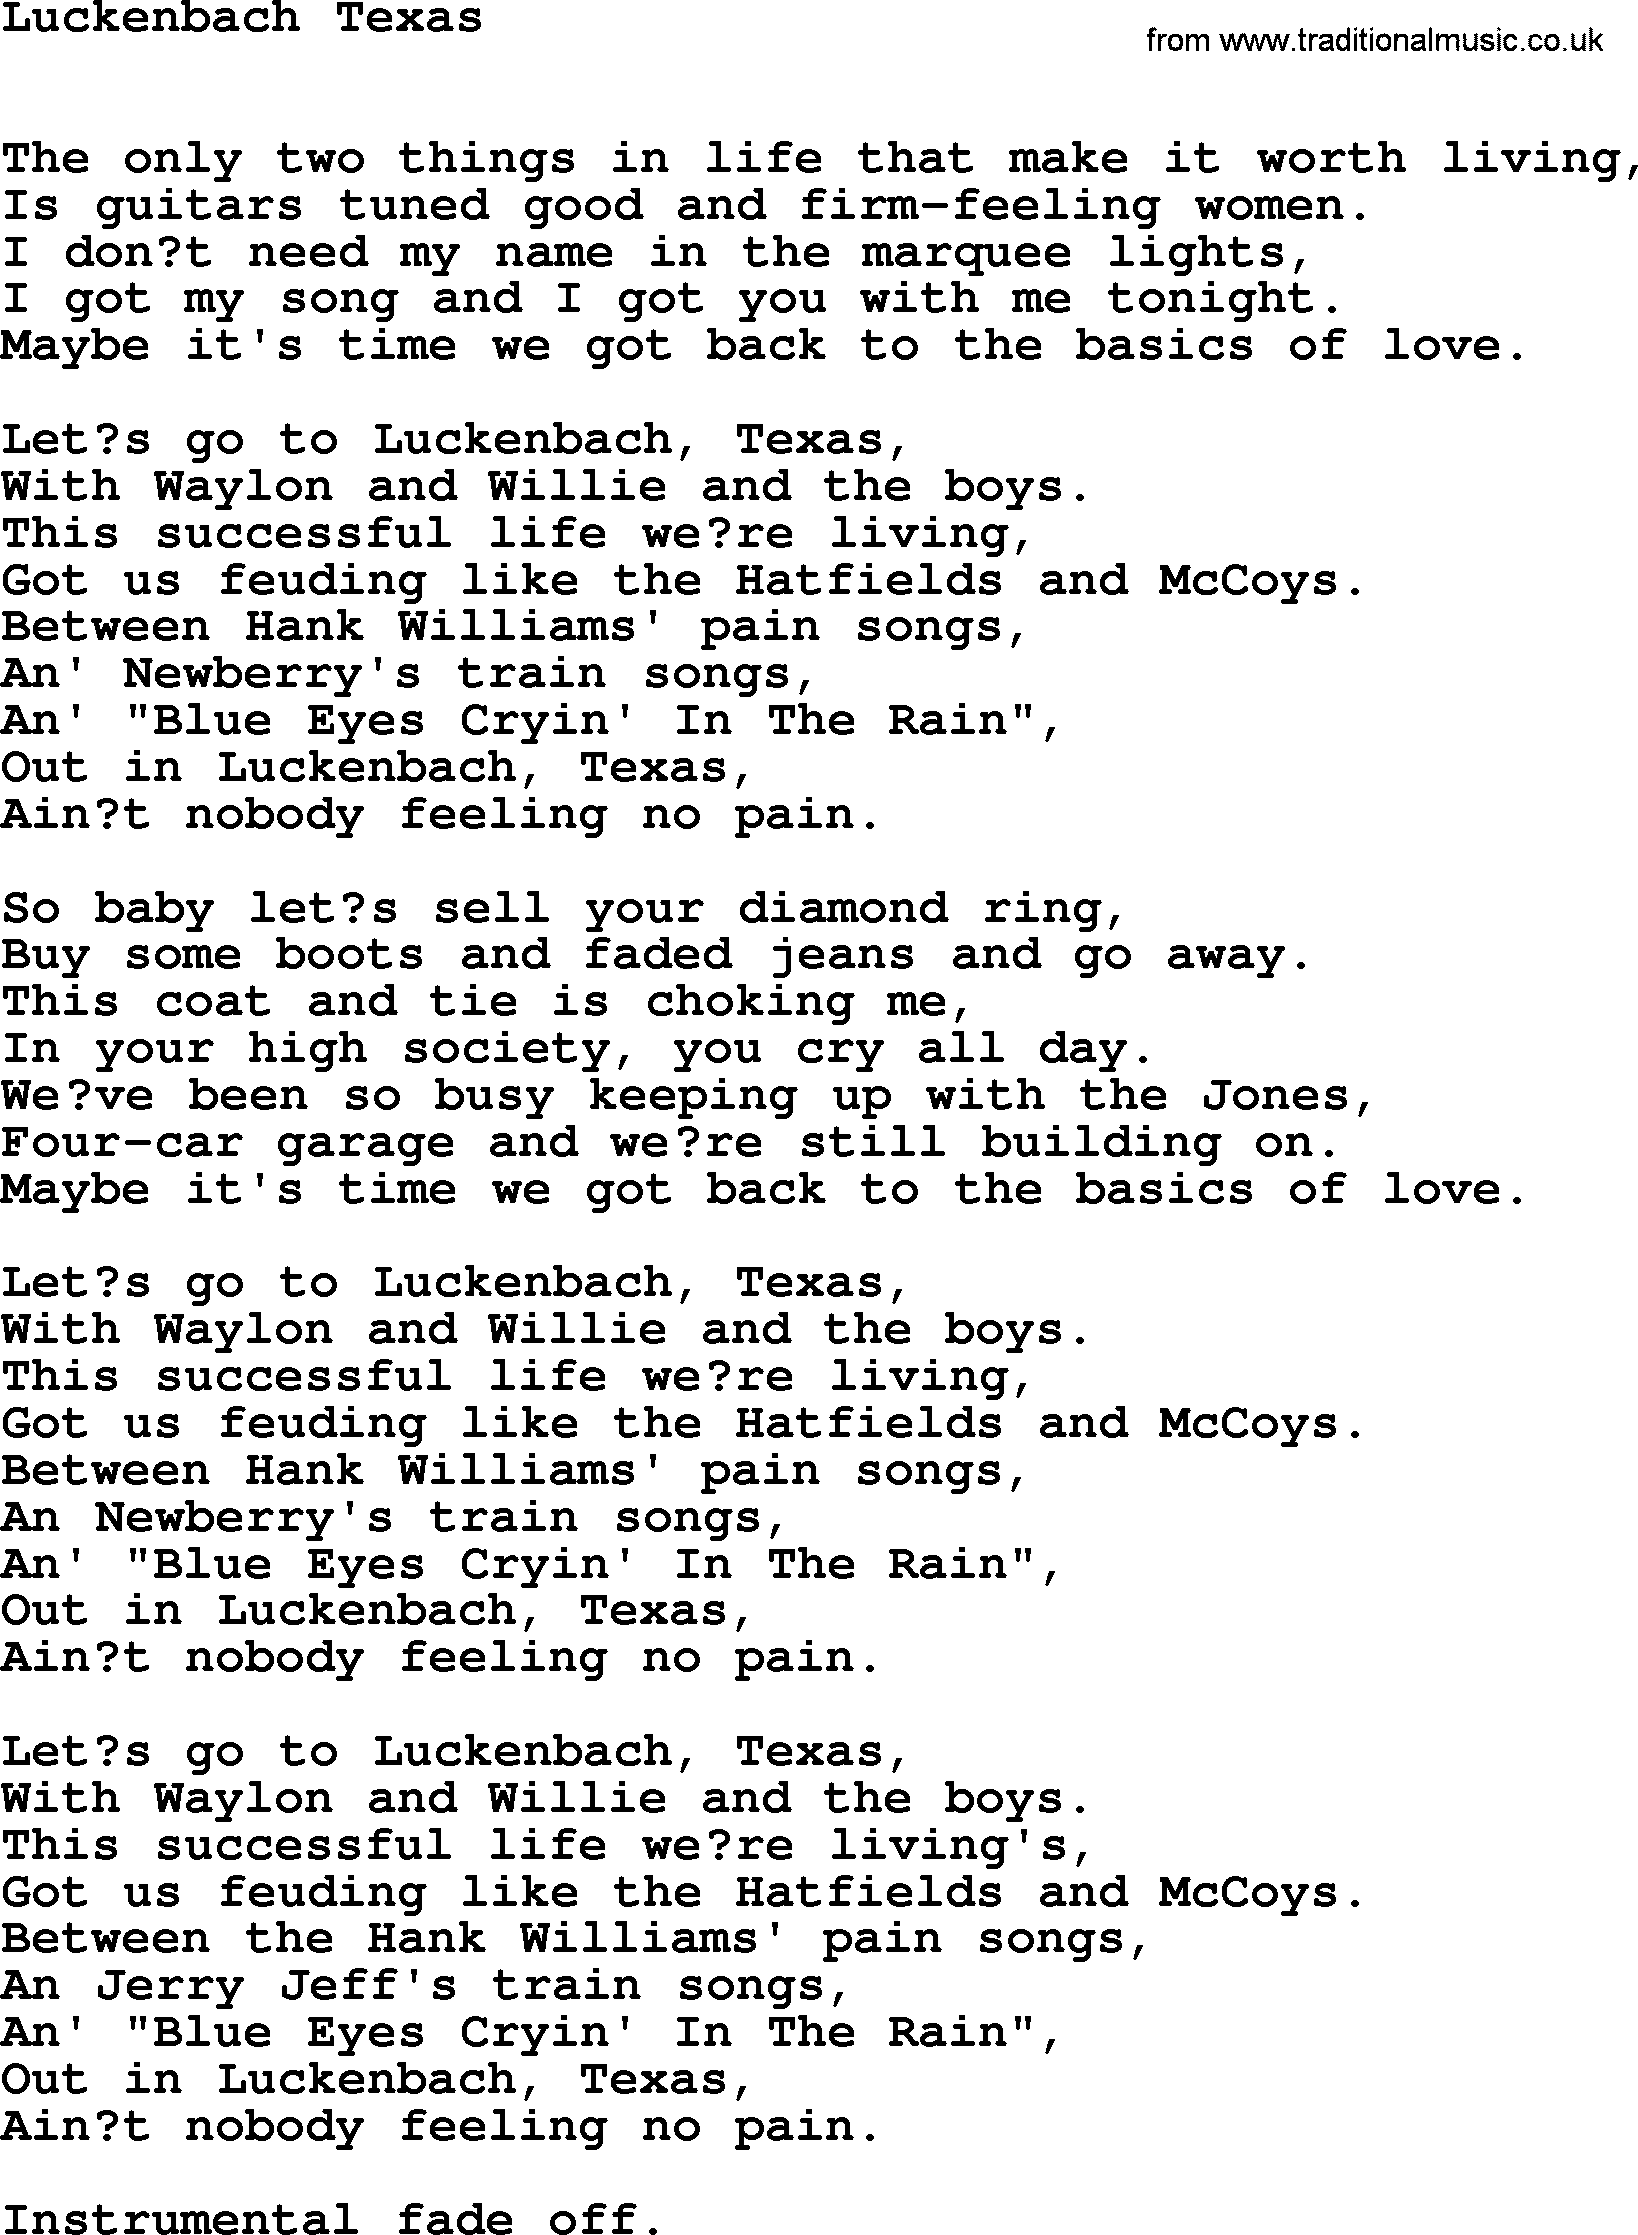 Willie Nelson song: Luckenbach Texas lyrics